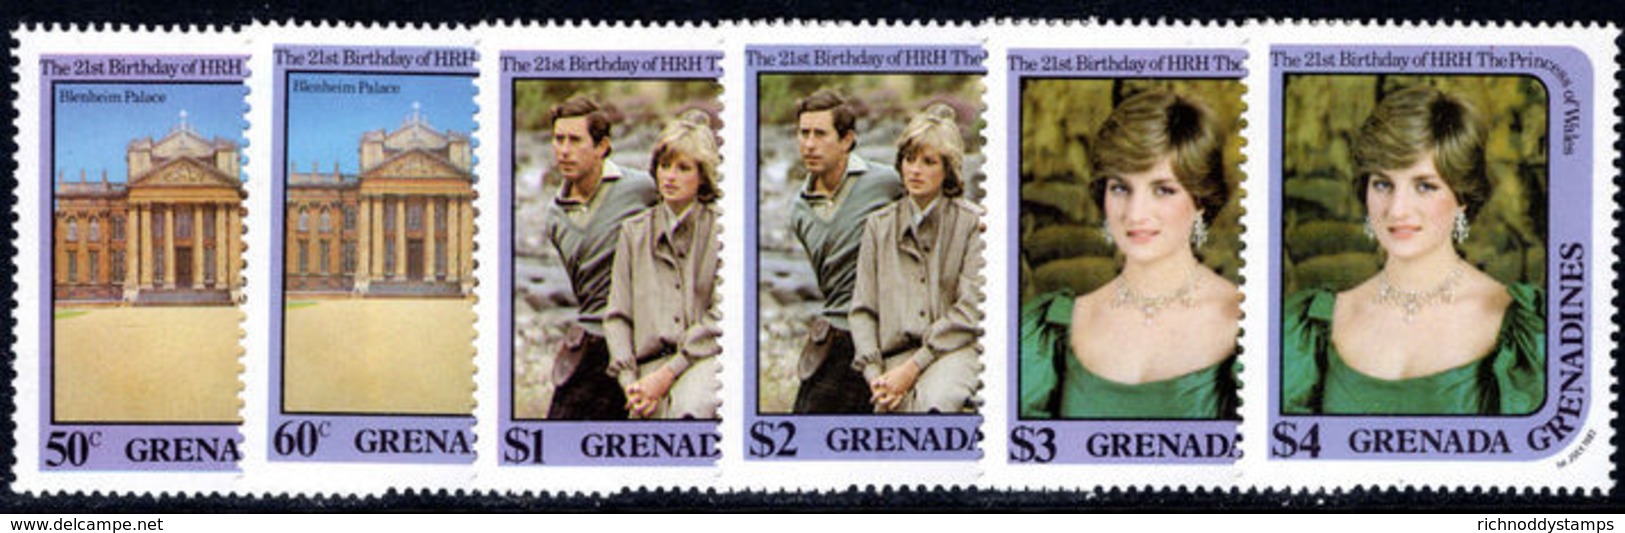 Grenada Grenadines 1982 Princess Of Wales Birthday Unmounted Mint. - Grenada (1974-...)